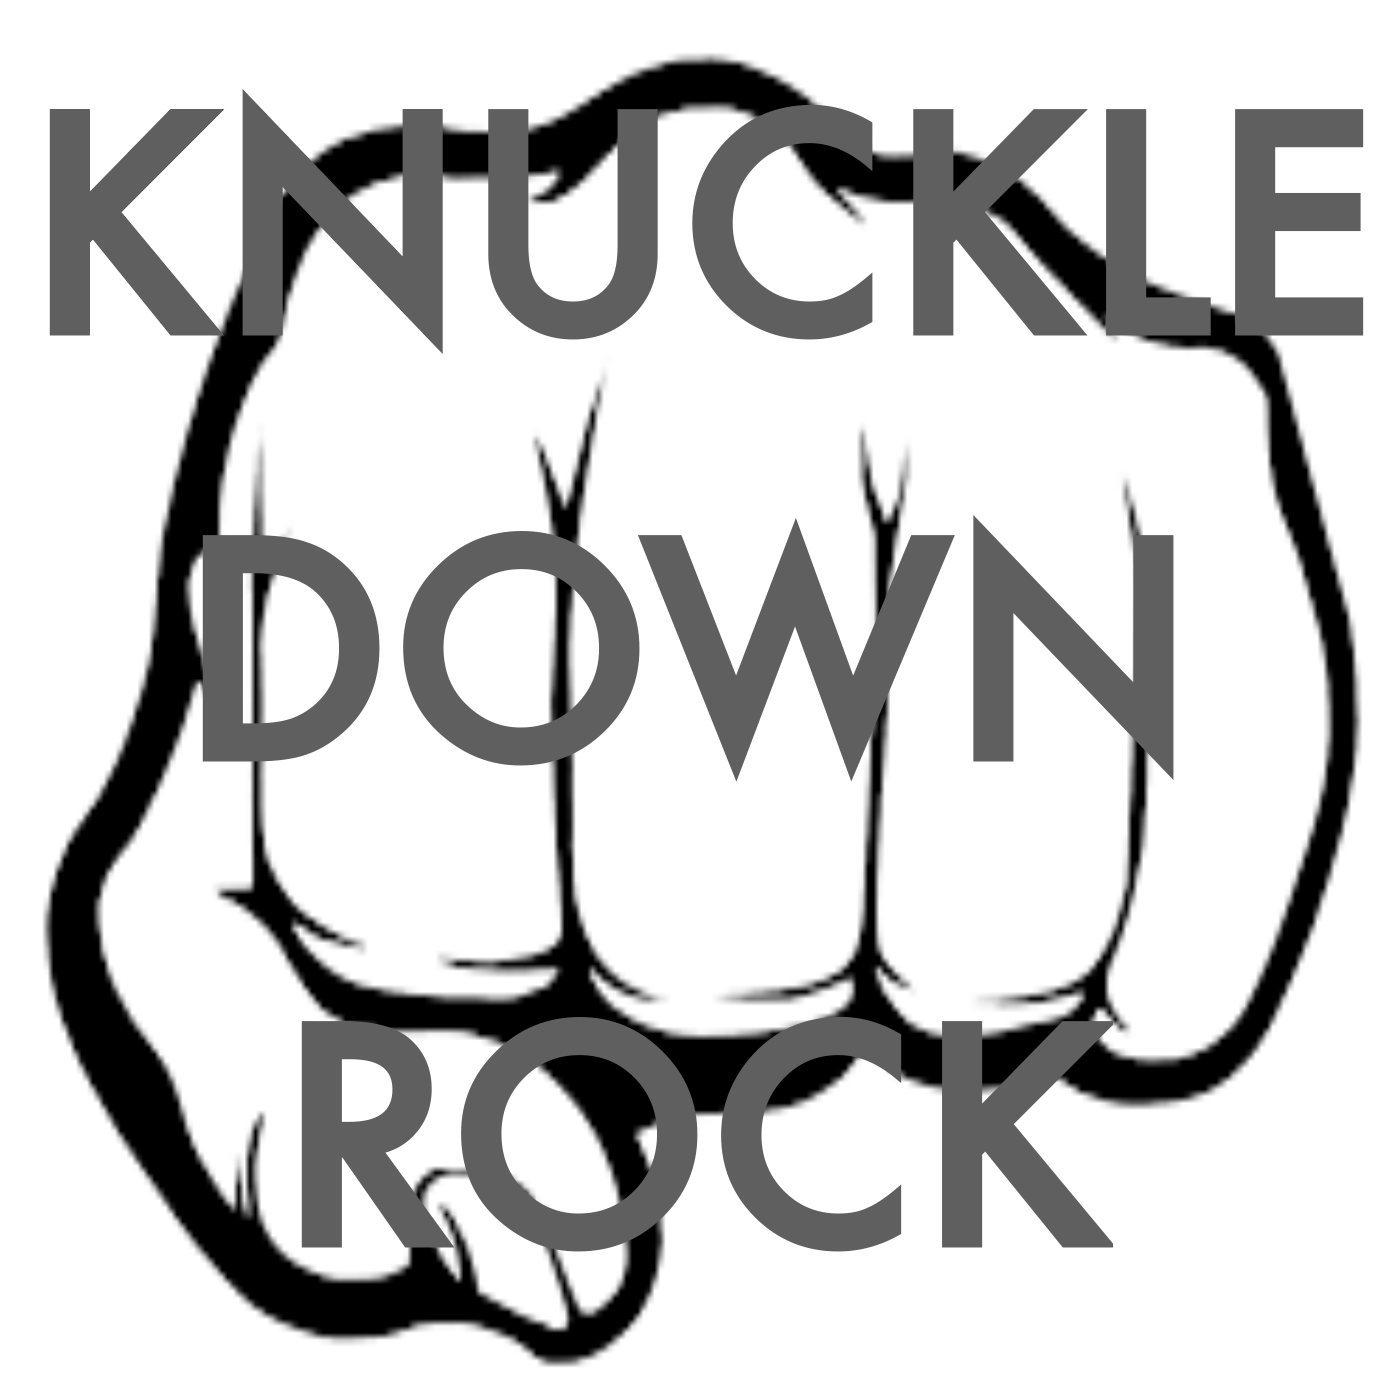 Knuckle Down Rock